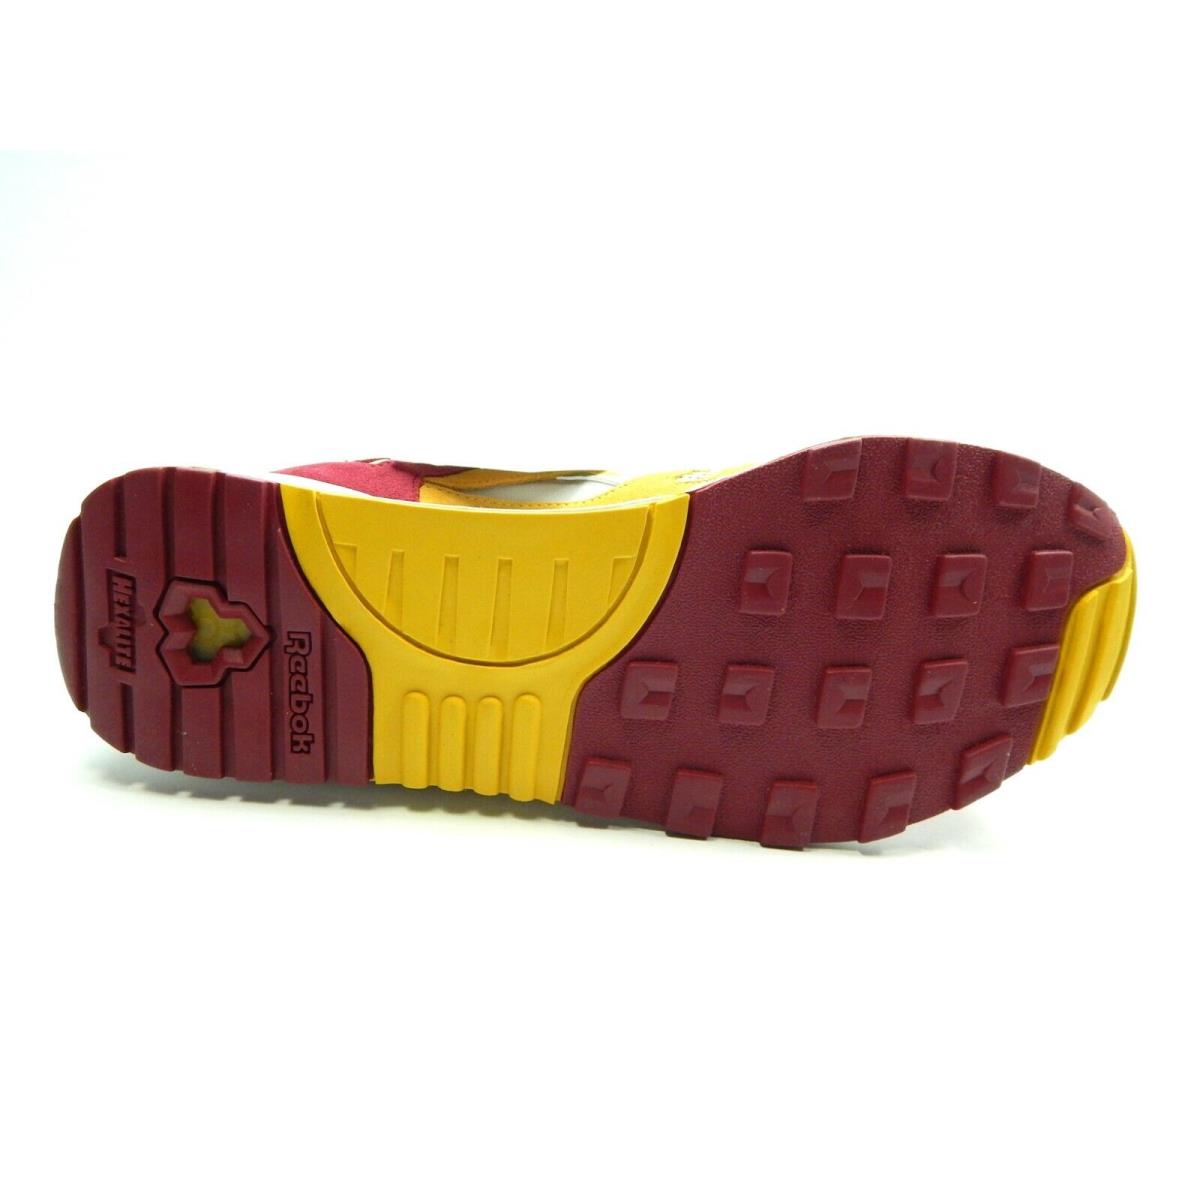 Reebok shoes Ventilator Classic - gold pink 3